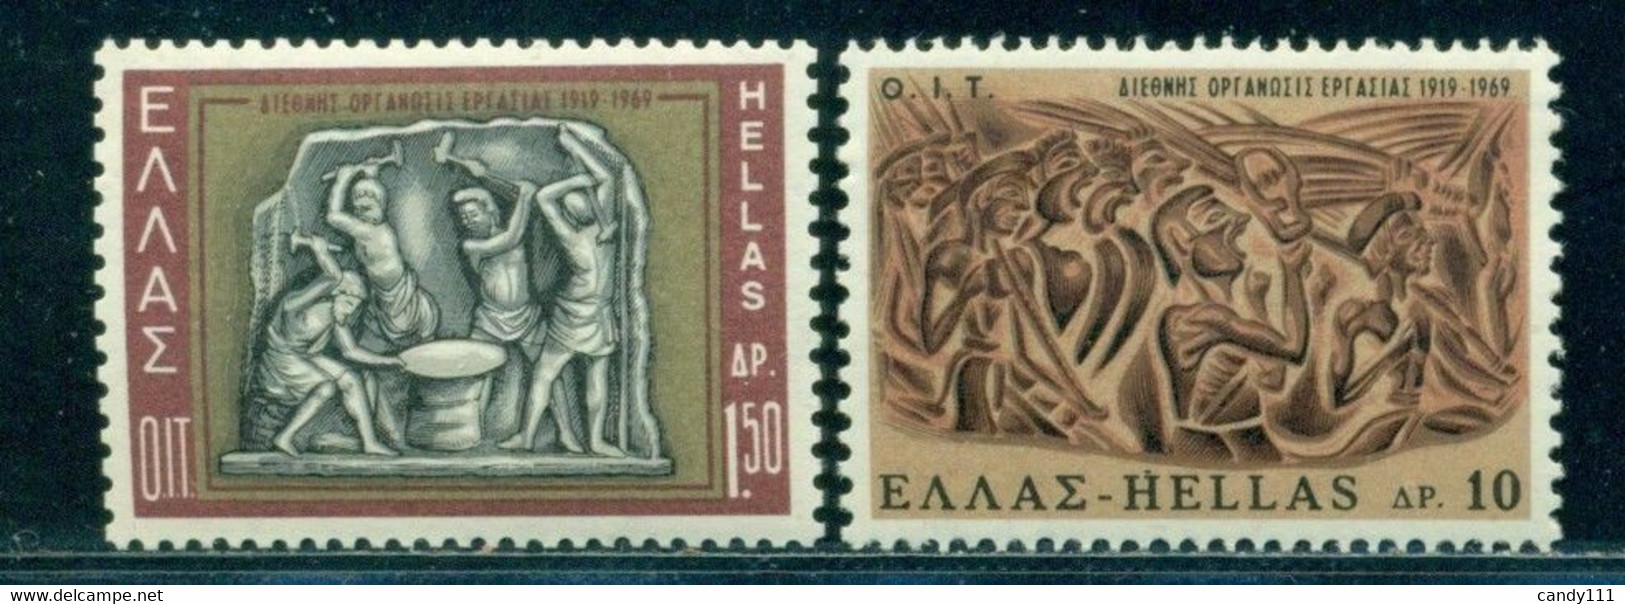 1969 ILO, Intl Labor Org, God Hephaestus And Cyclops, Labor Holiday, Greece, Mi. 997, MNH - IAO